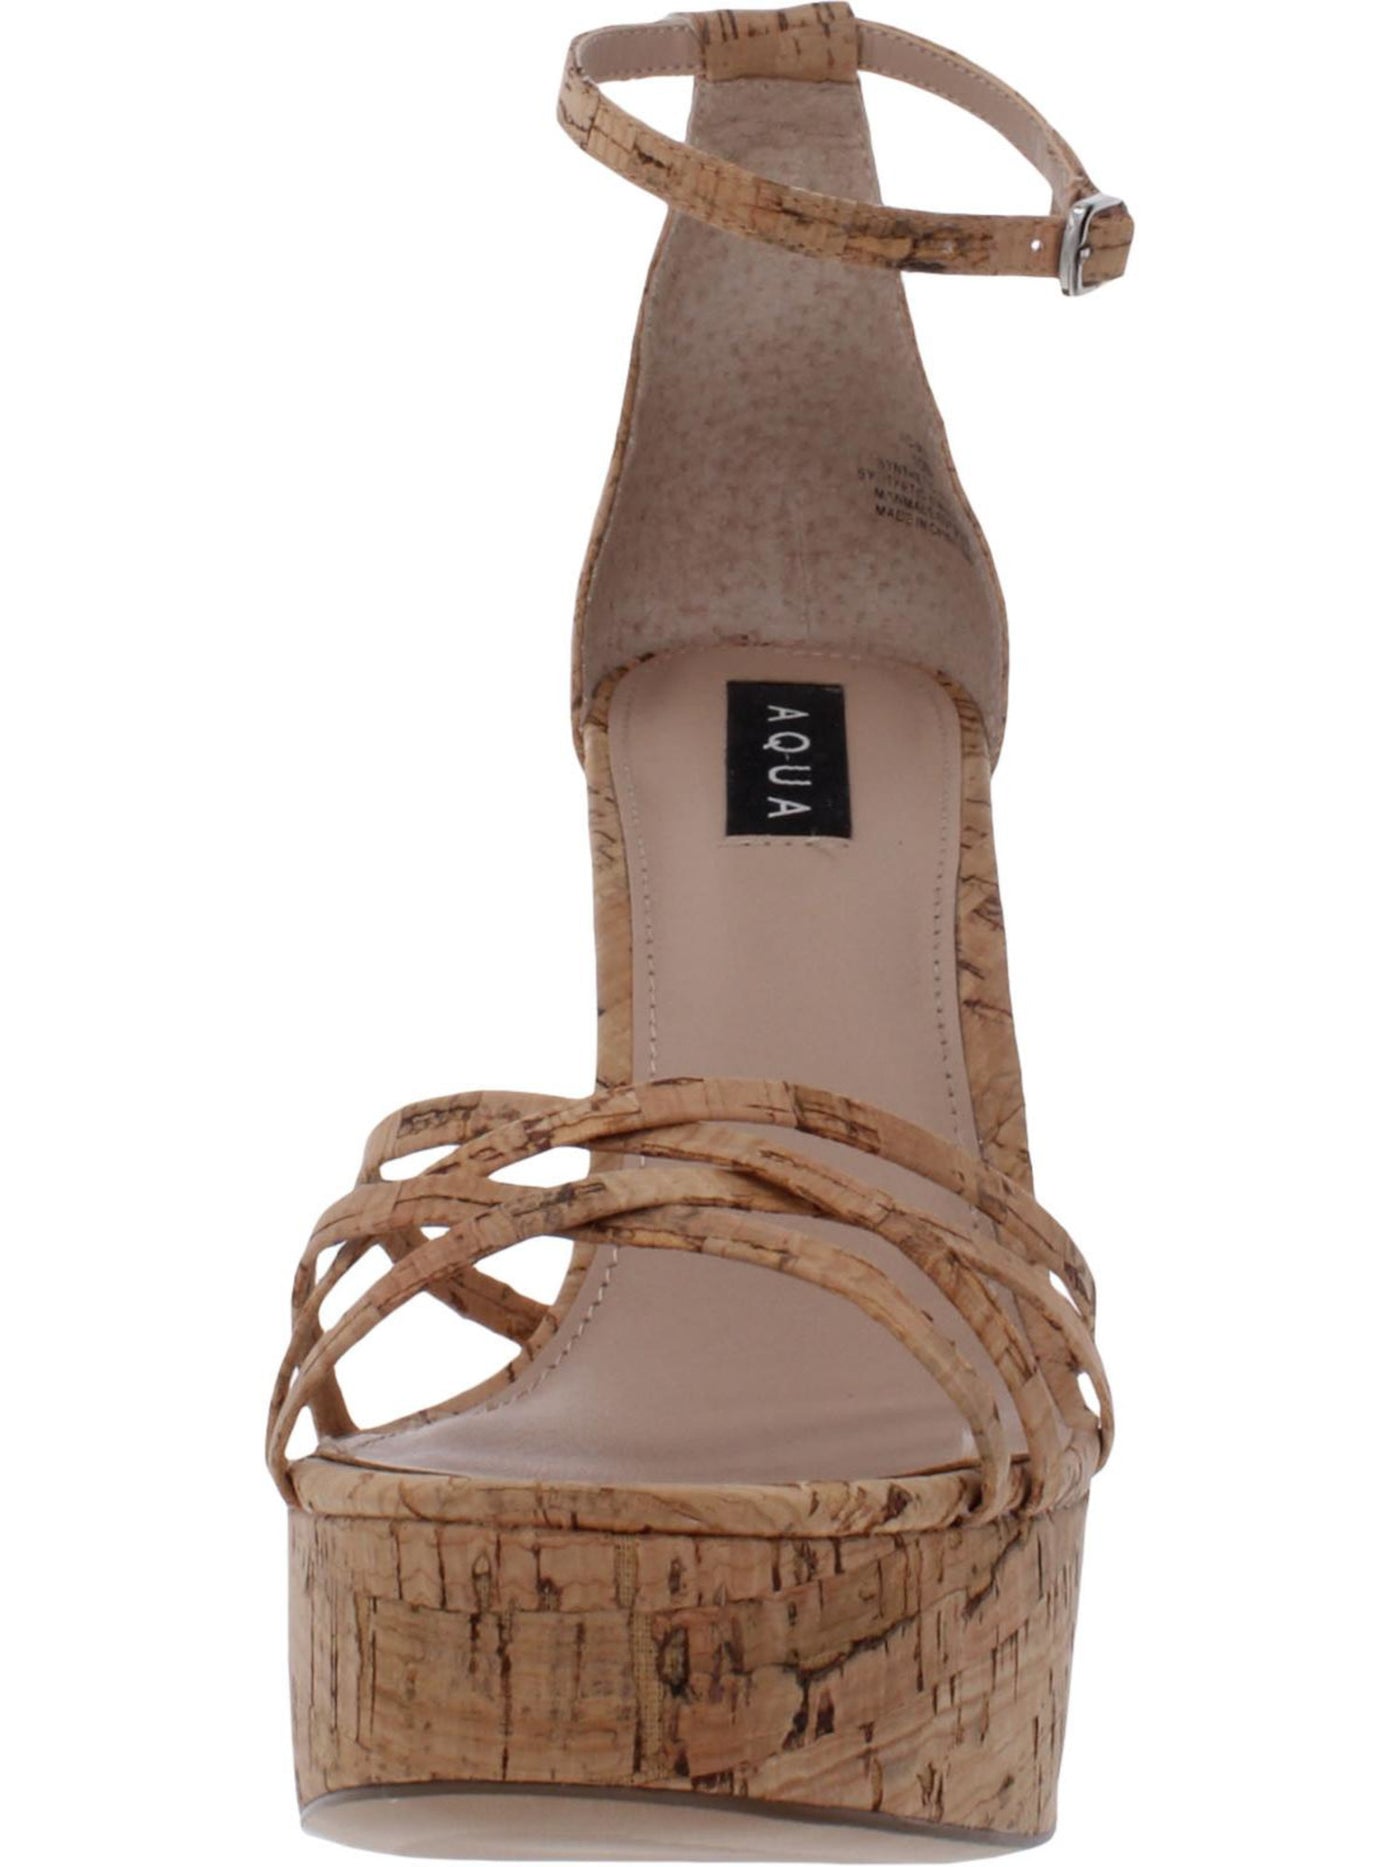 AQUA Womens Beige Adjustable Strap Cushioned Milo Round Toe Block Heel Buckle Dress Sandals Shoes 5.5 M